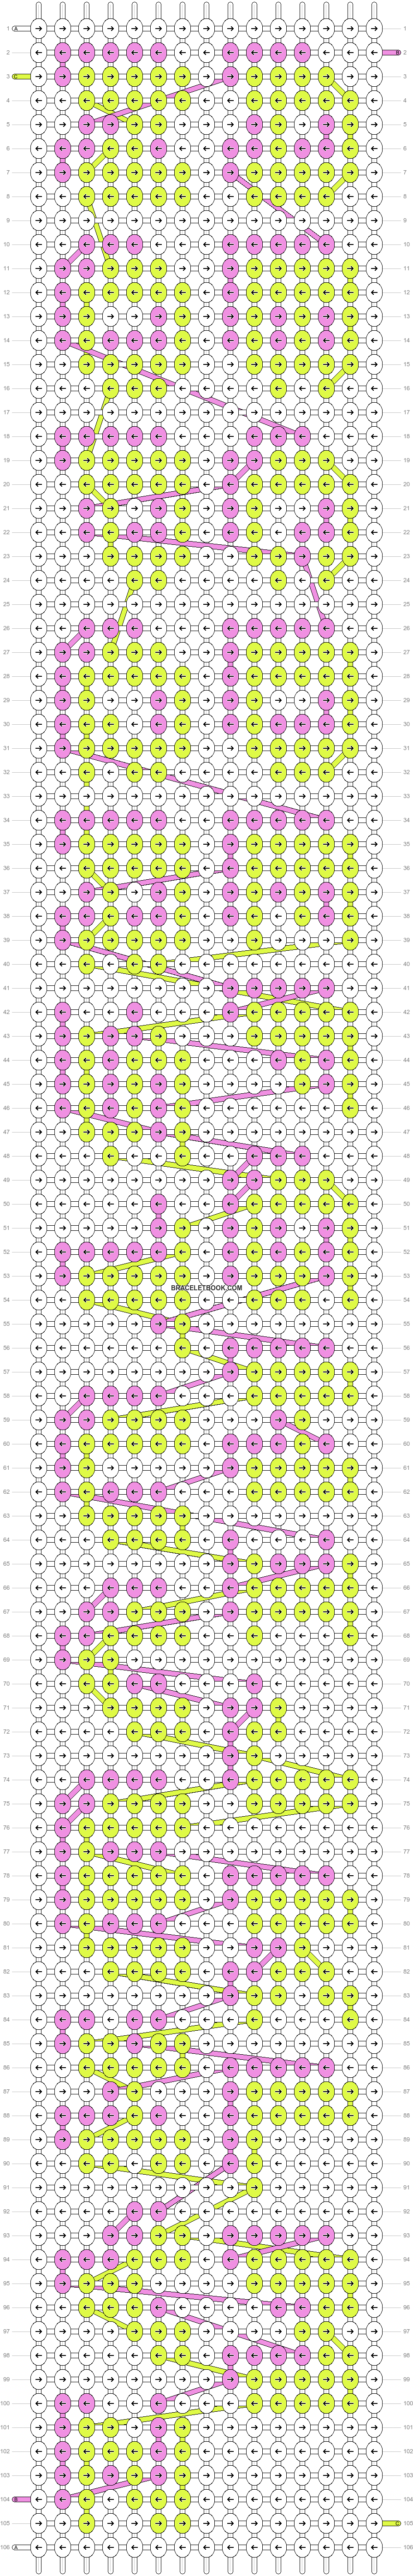 Alpha pattern #34279 variation #41952 pattern